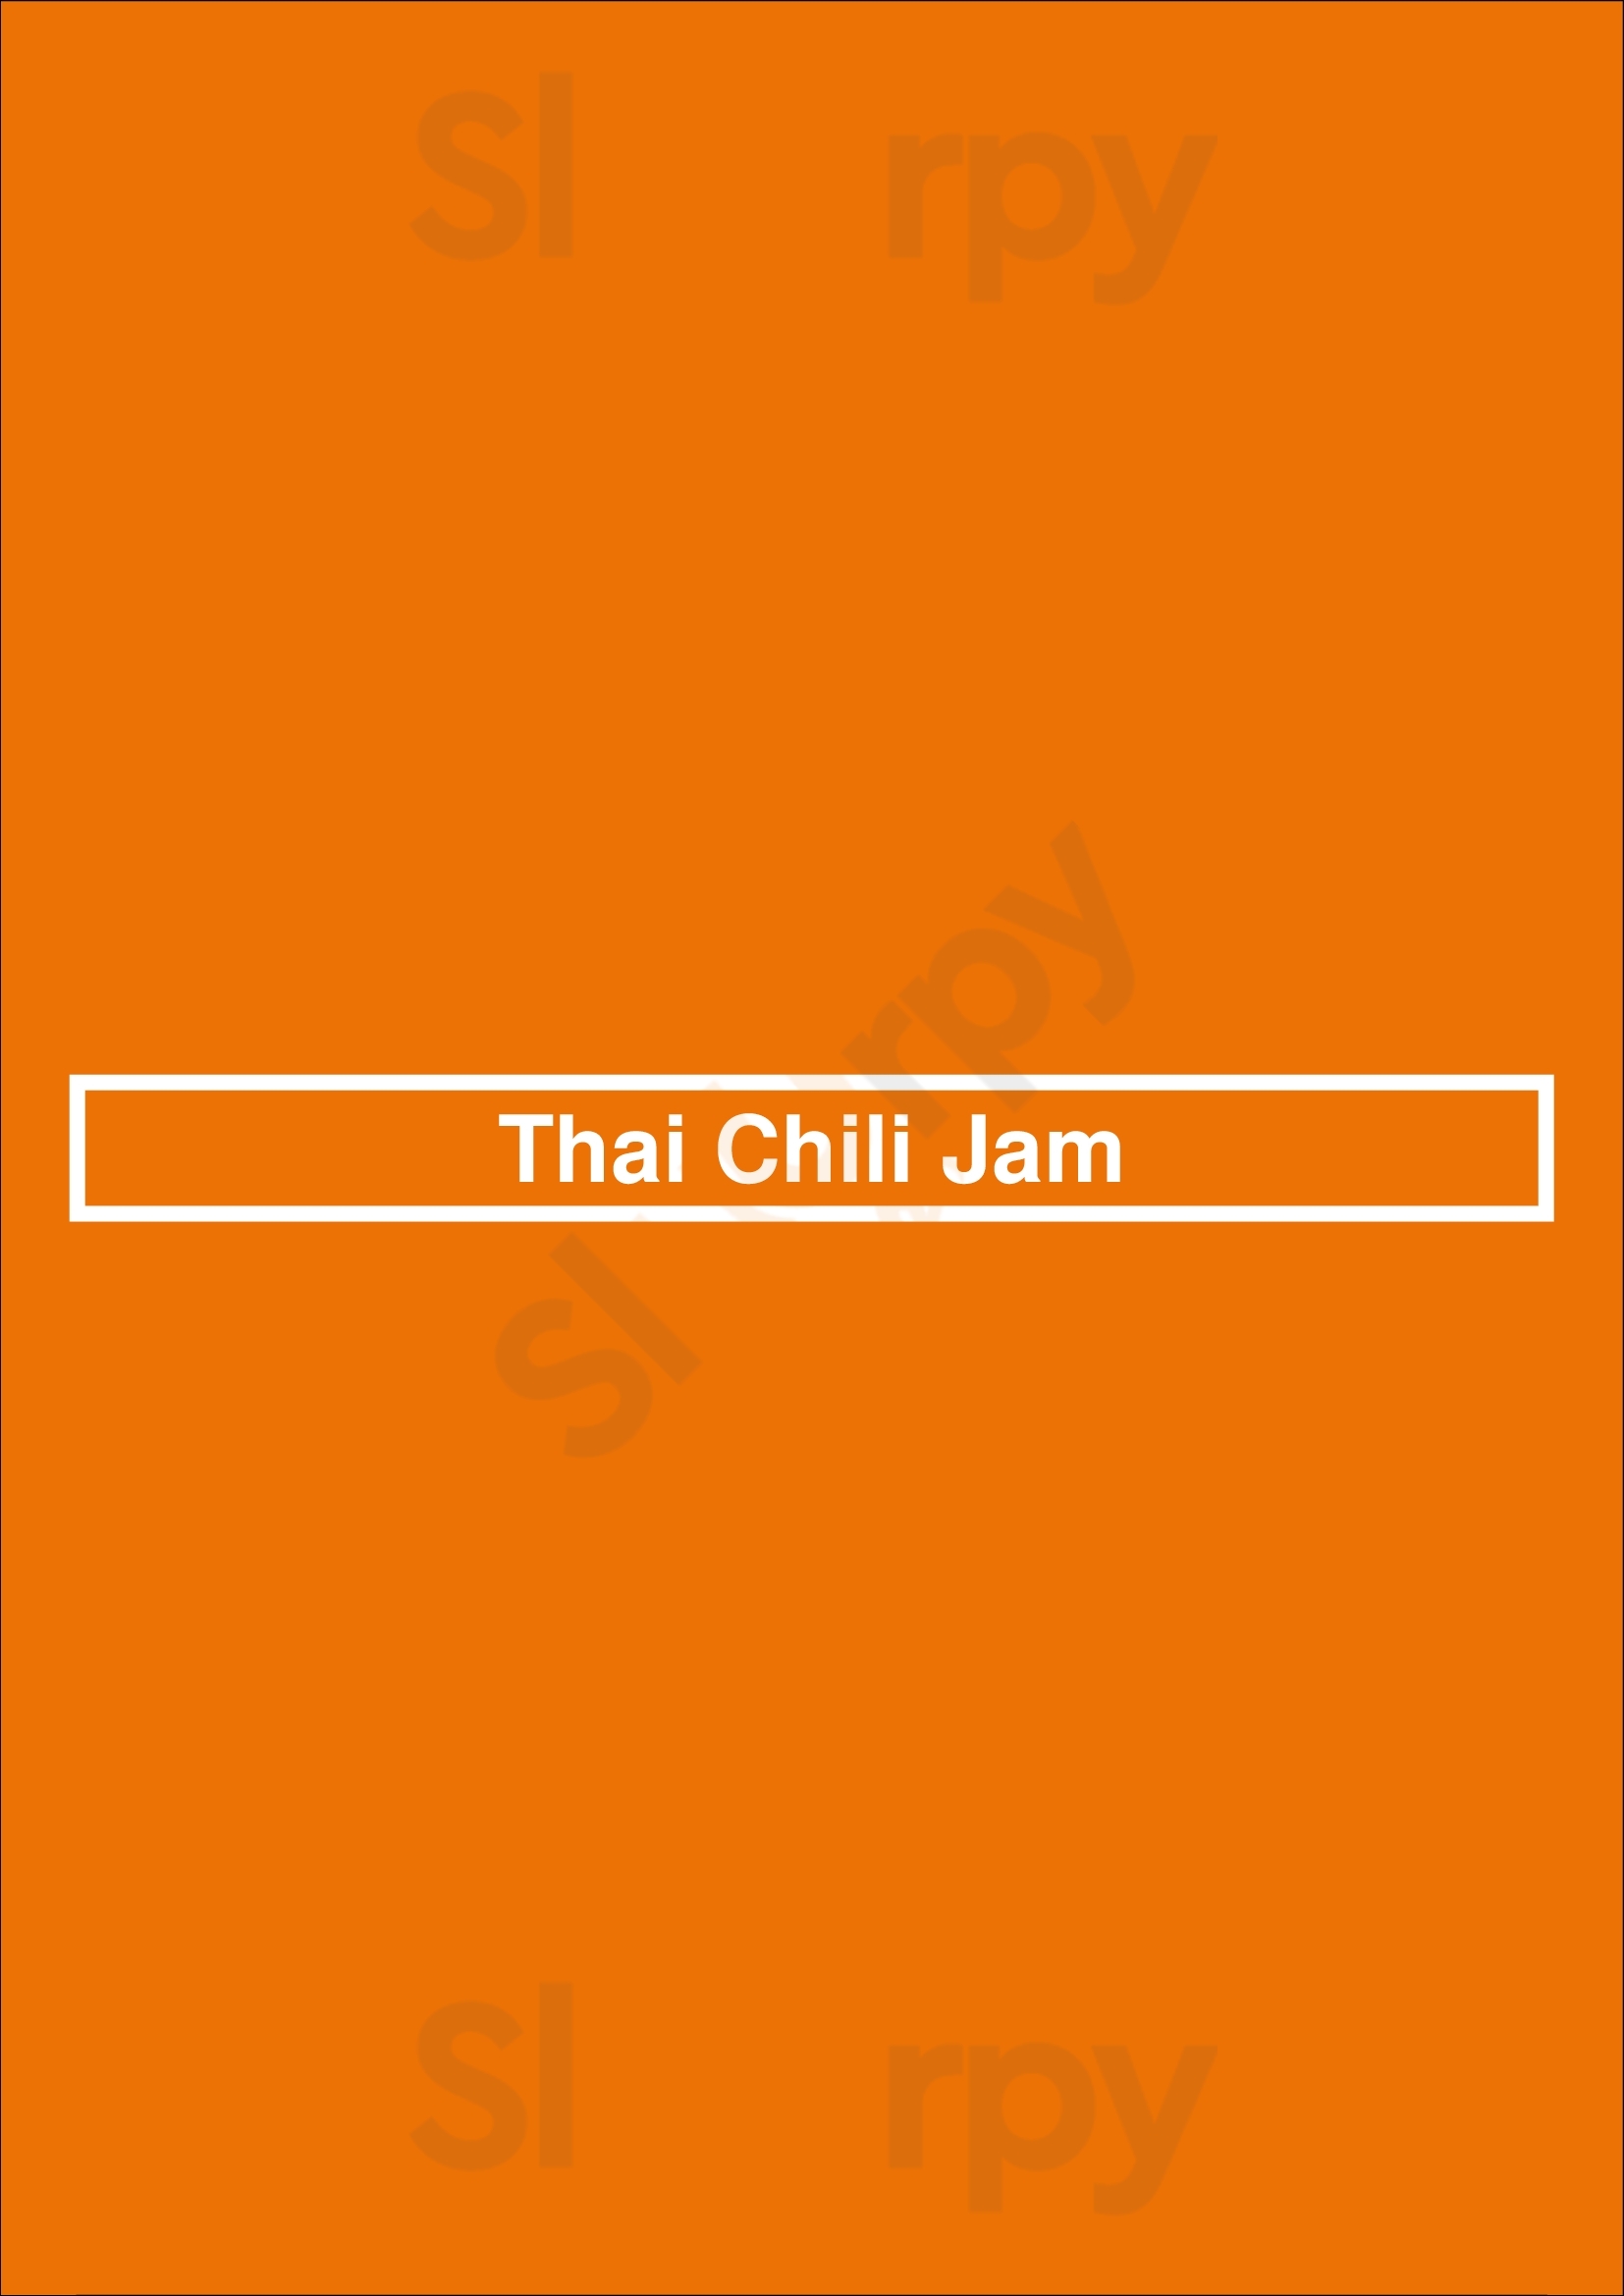 Thai Chili Jam Portland Menu - 1